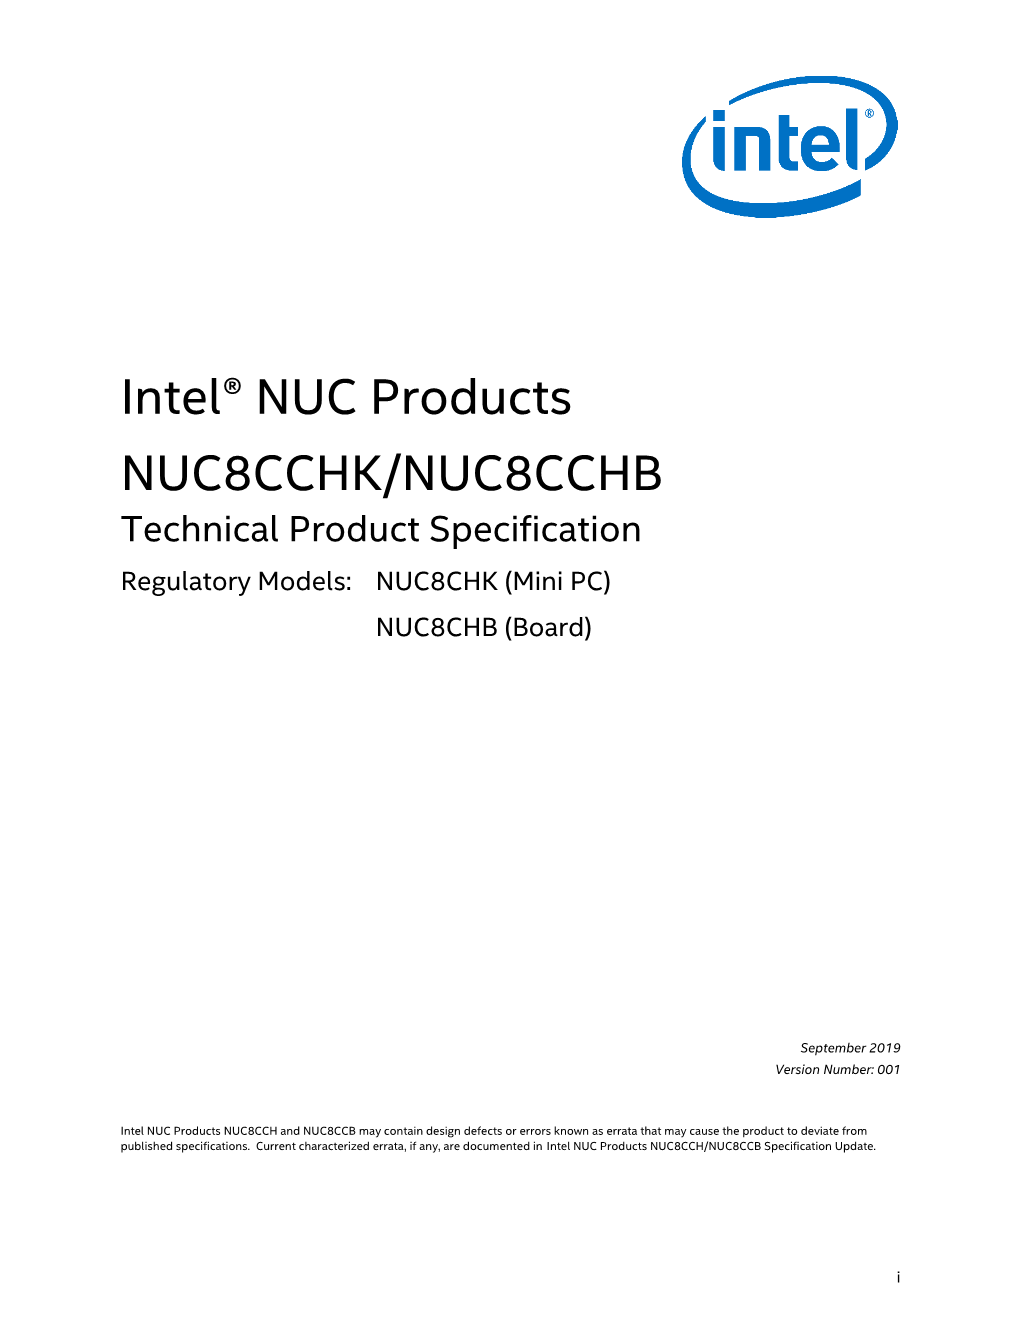 Intel® NUC Products NUC8CCHK/NUC8CCHB Technical Product Specification Regulatory Models: NUC8CHK (Mini PC) NUC8CHB (Board)